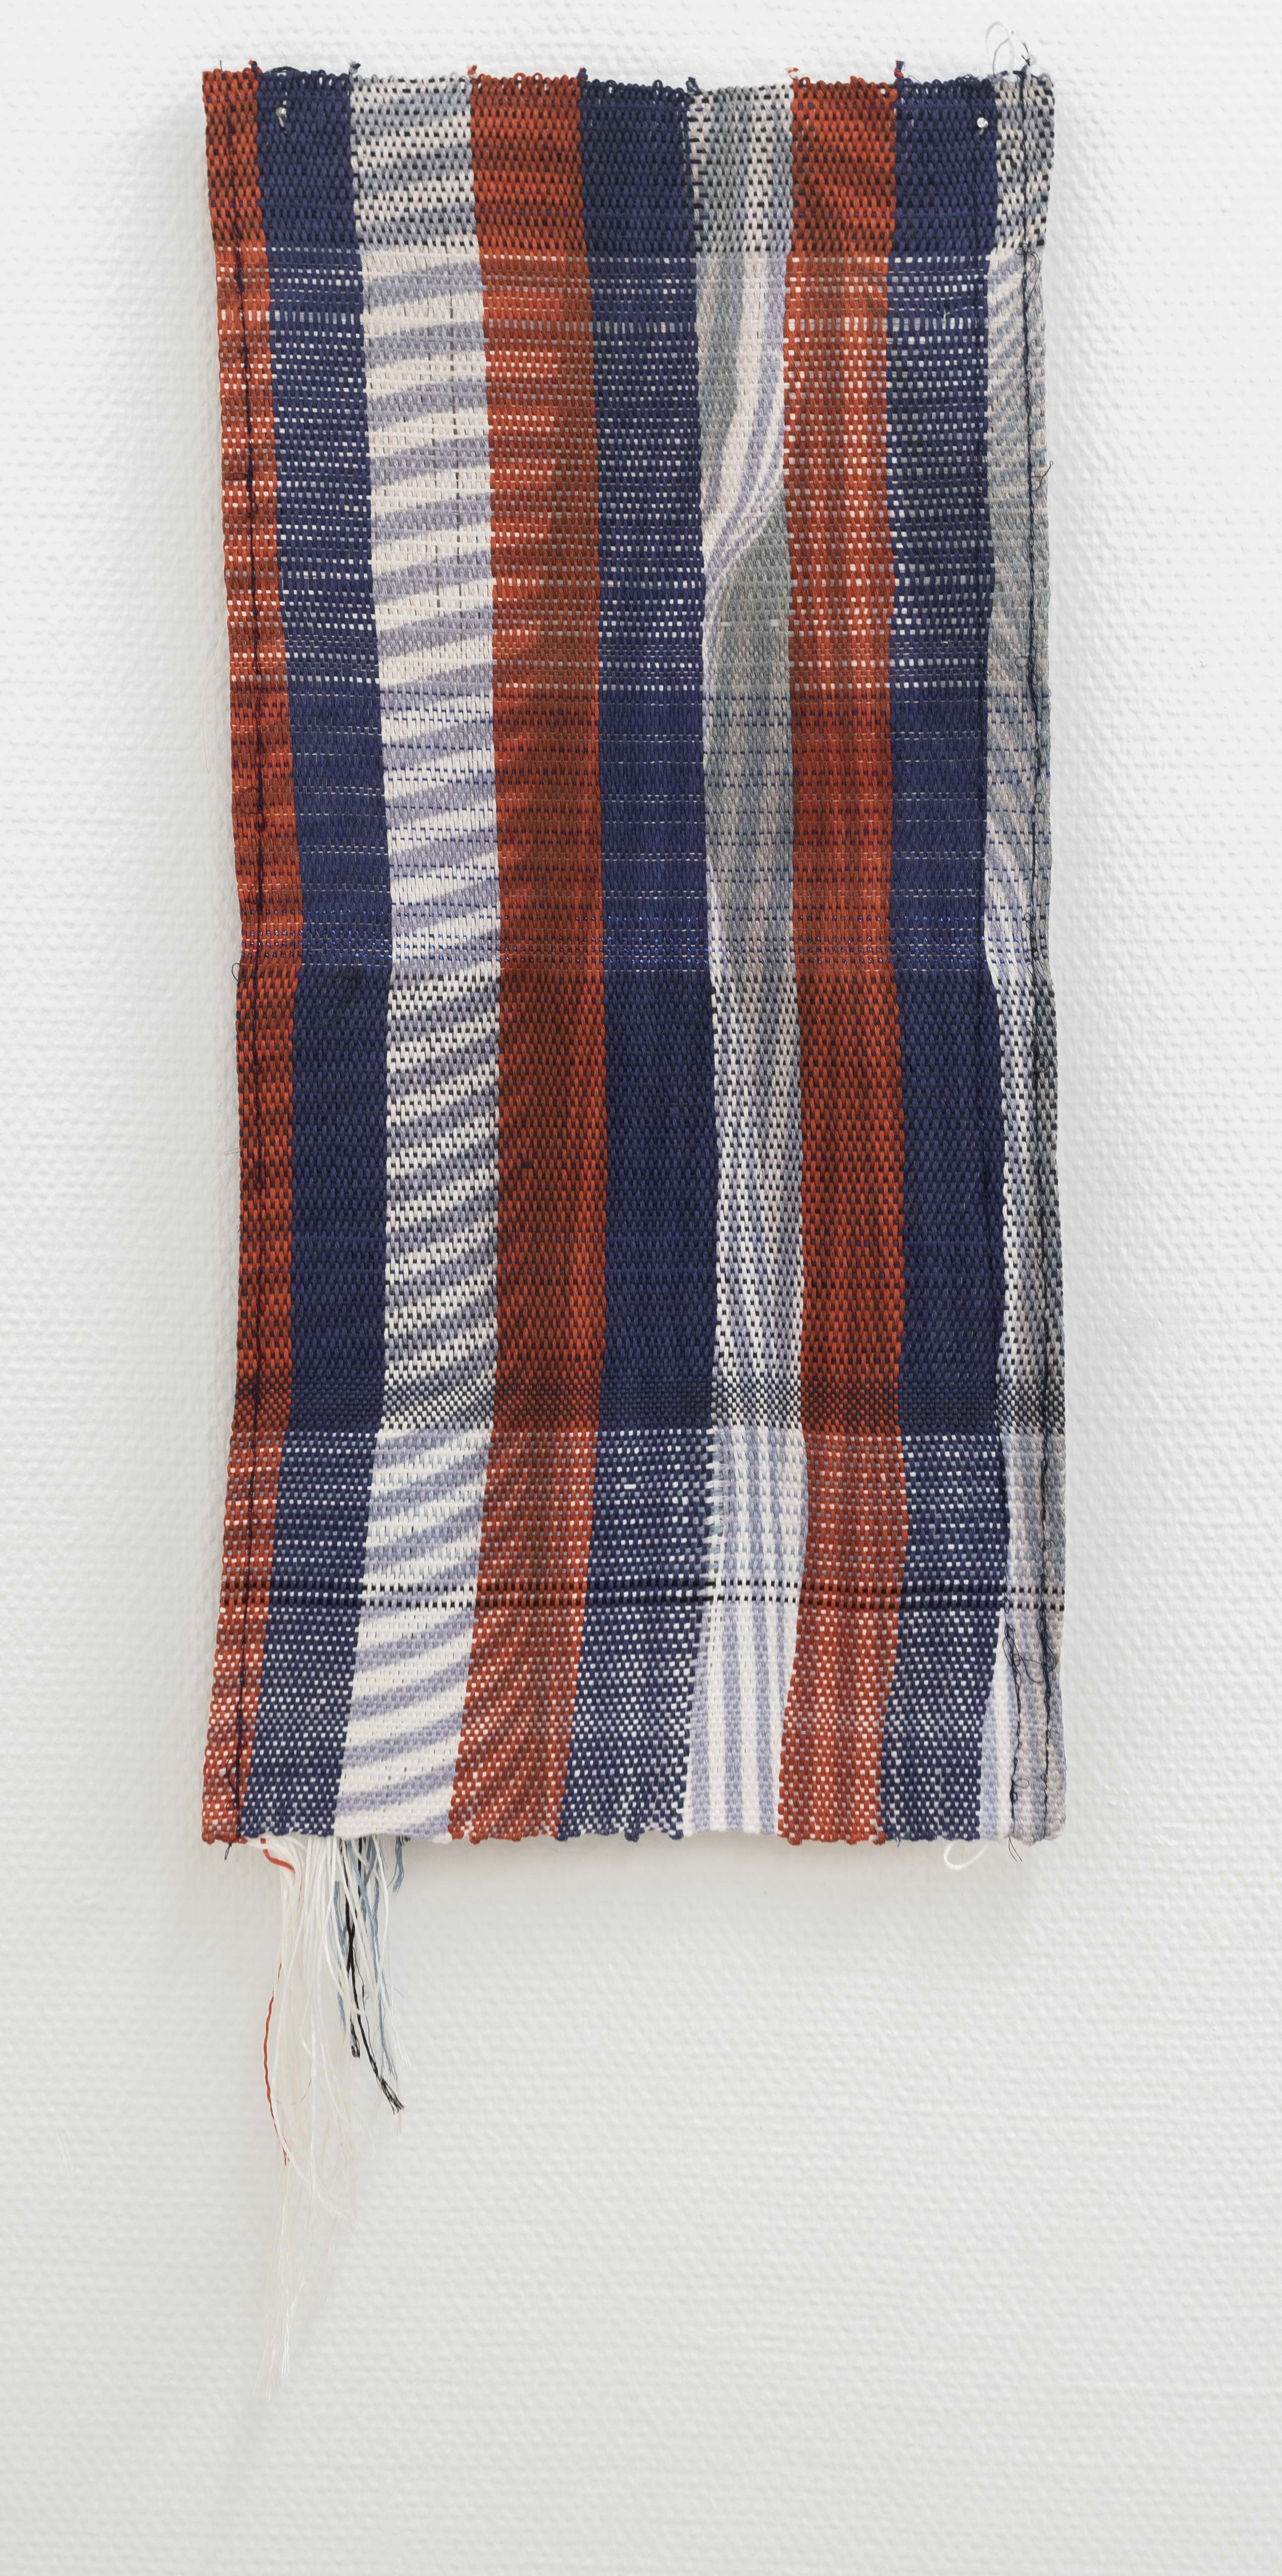 7. Marie Hazard - L’orange Bleue, 2018, hand-woven in paper, linen, digital print sublimation, 31 x 63 cm,